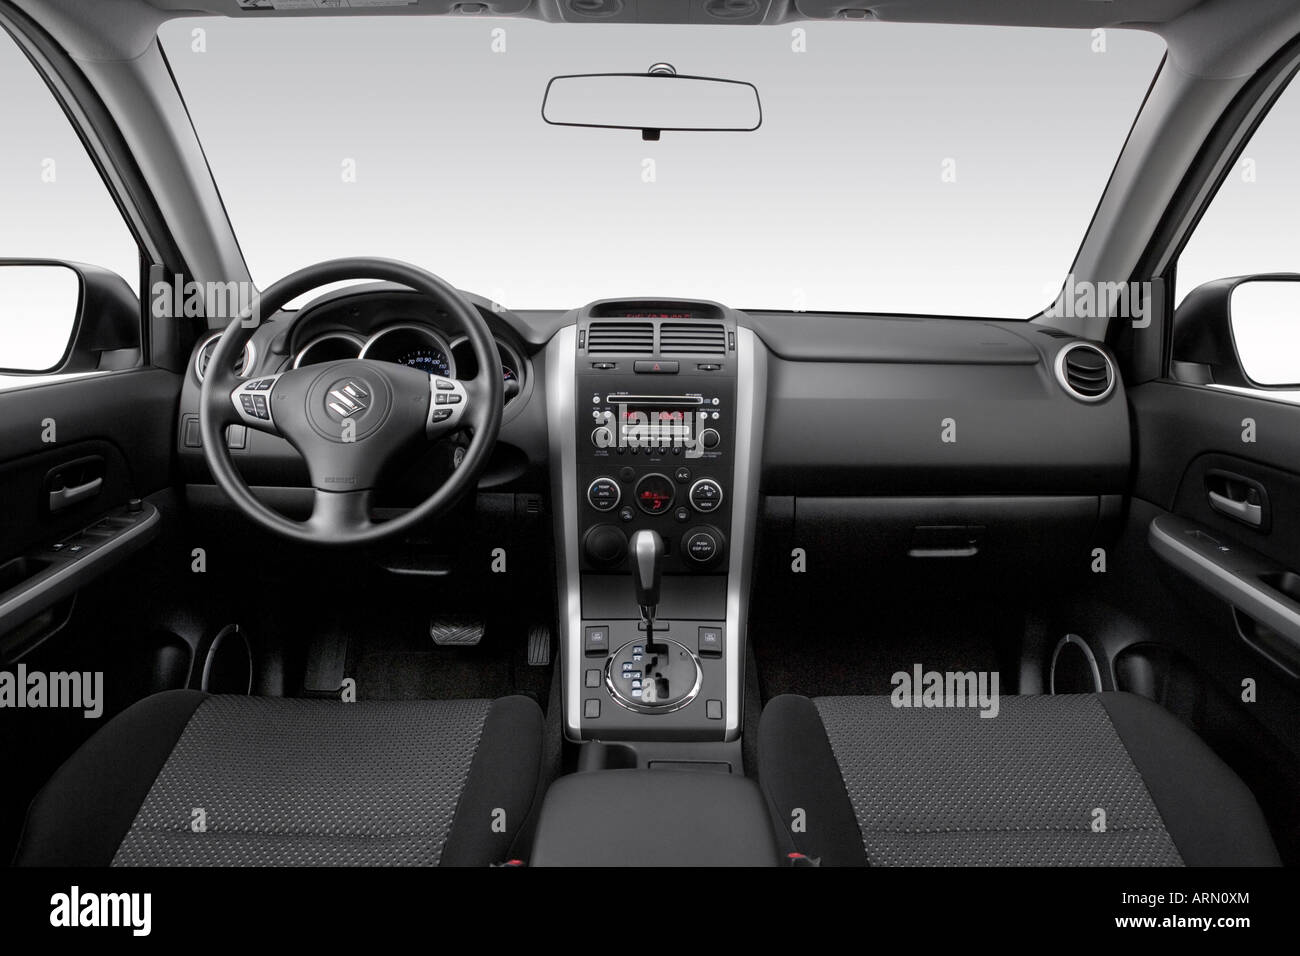 2008 Suzuki Grand Vitara en plata - Tablero de a bordo, consola central, la de cambios ver de stock - Alamy